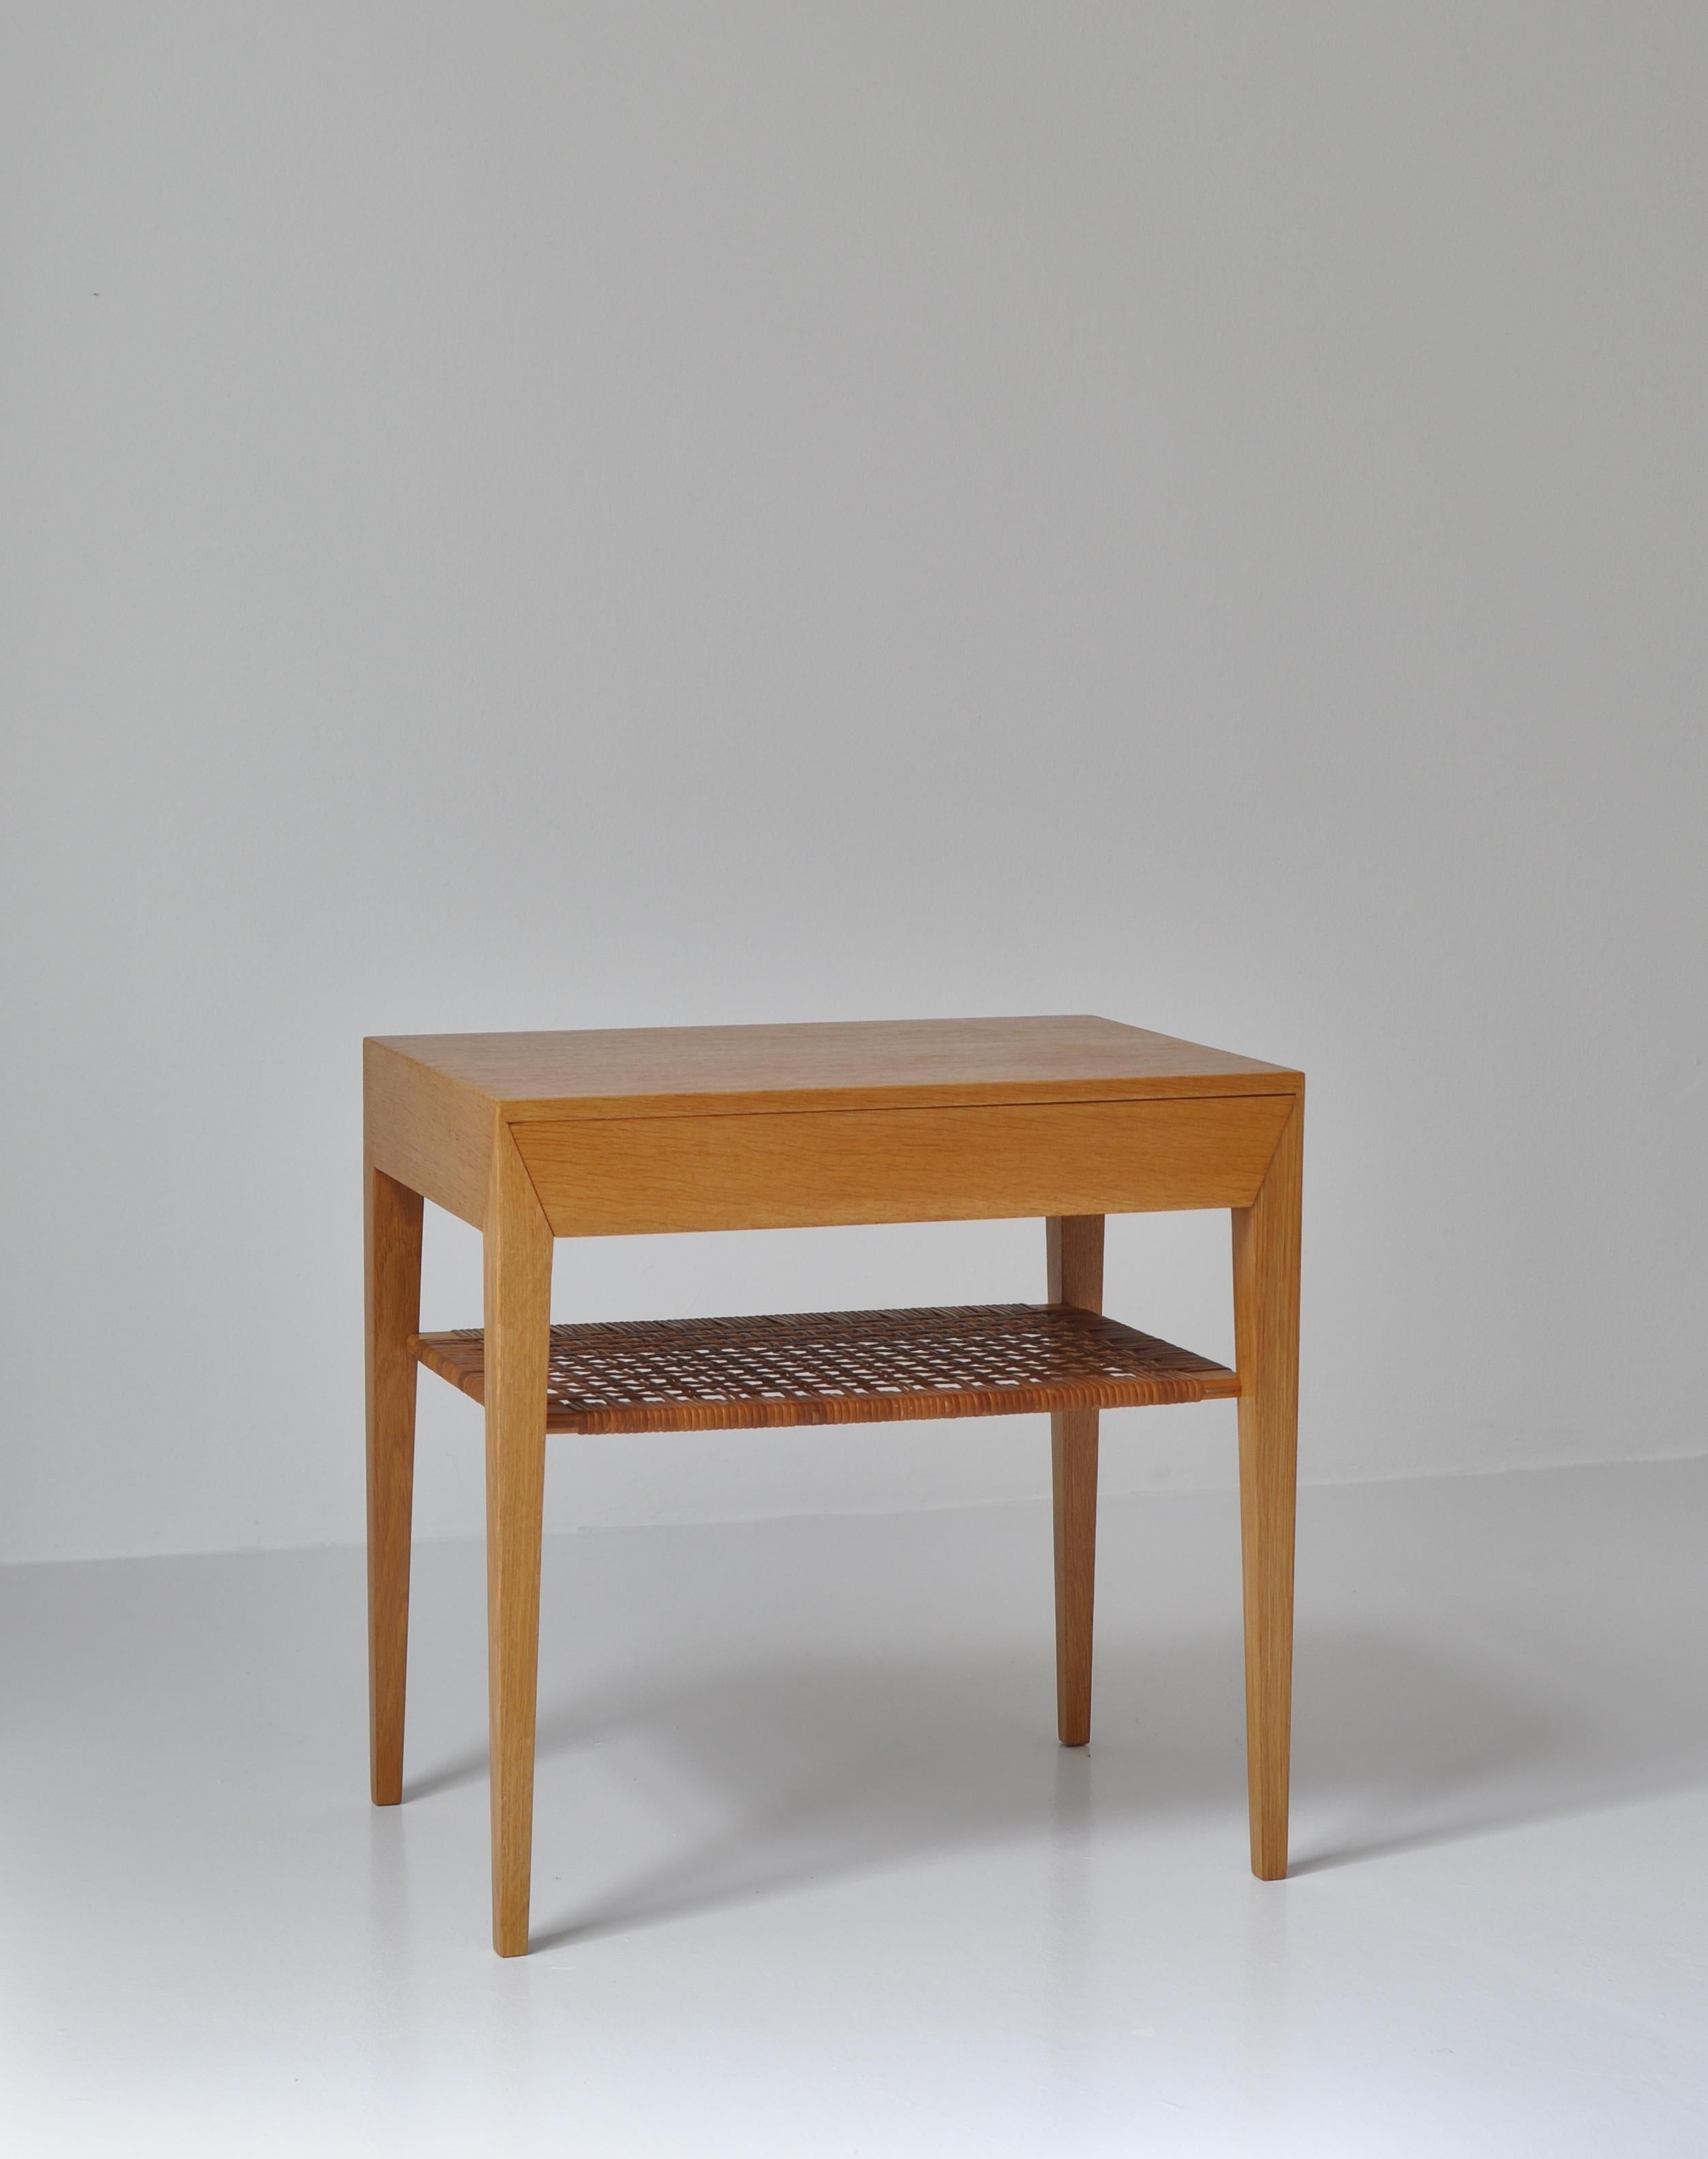 Mid-20th Century Danish Modern Oak Side Table with Shelf in Rattan Cane by Severin Hansen, 1950s